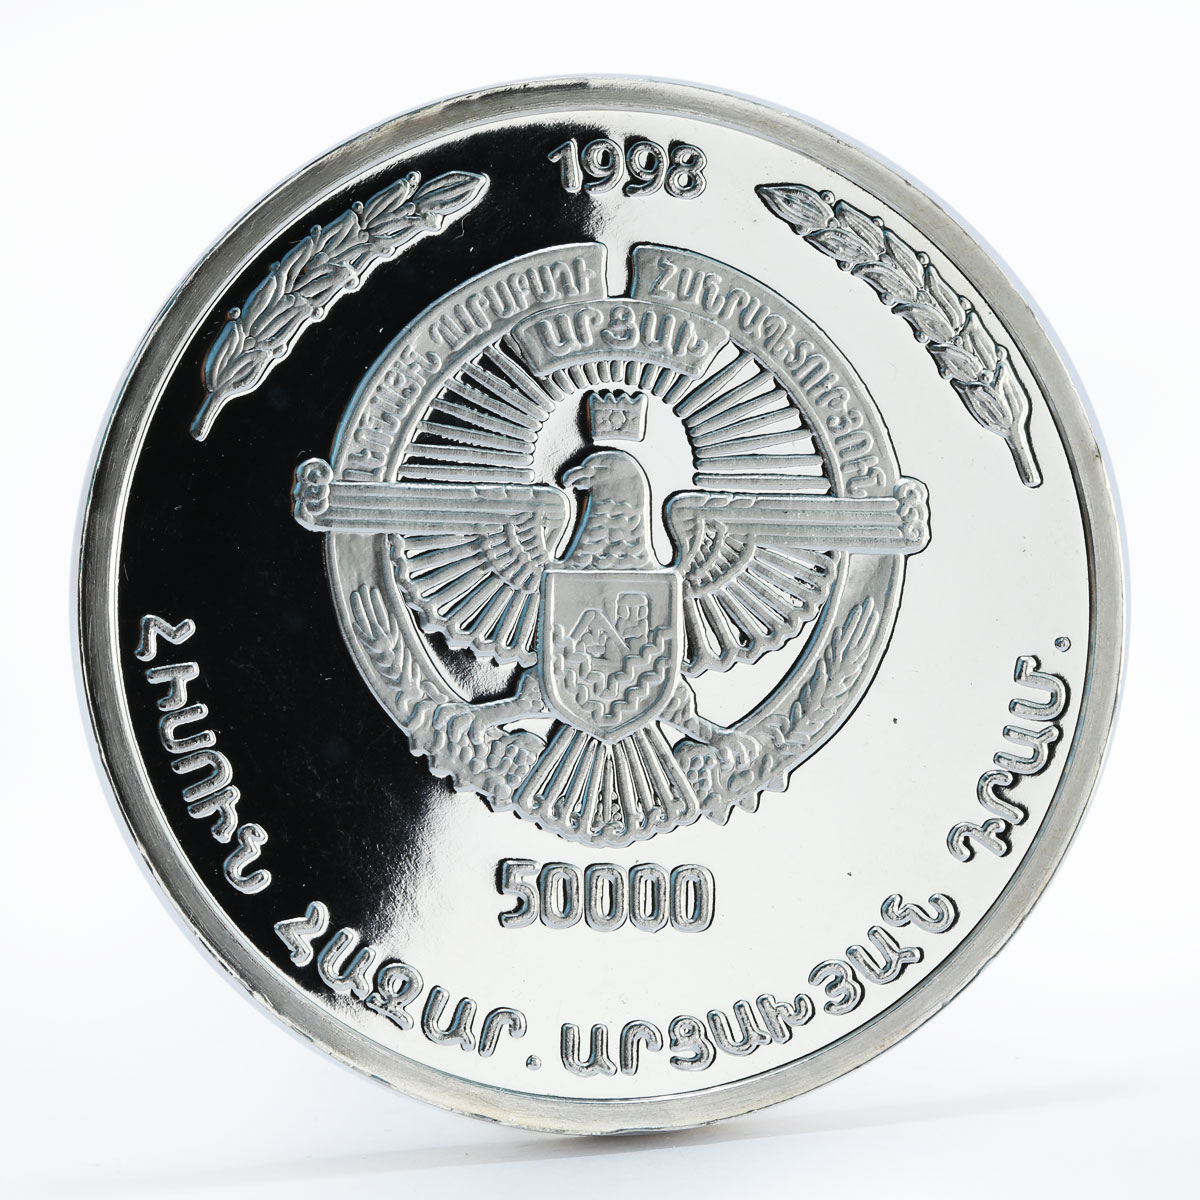 Armenia 50000 dram Mesrop Mashtots Scientist proof silver coin 1998